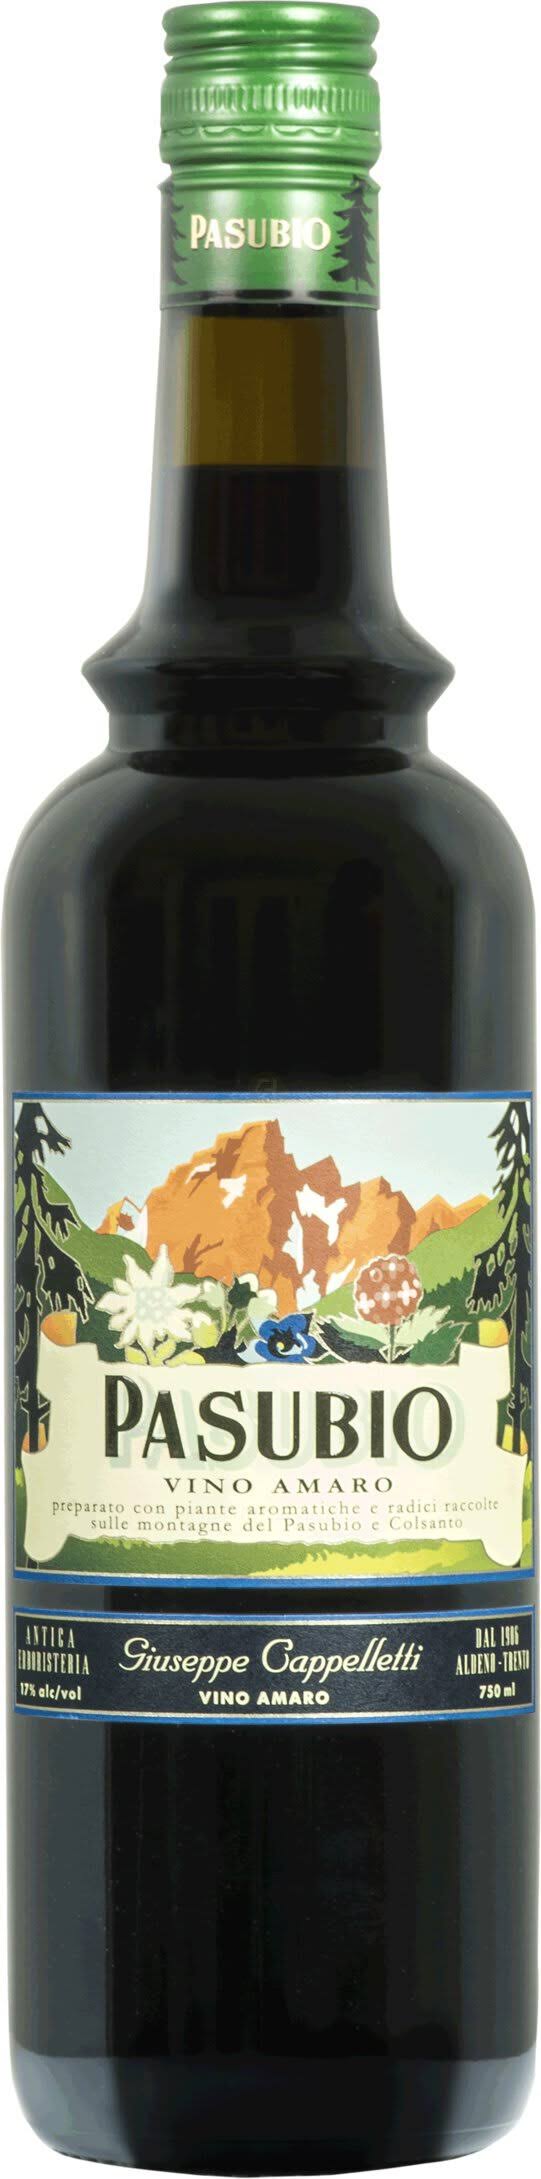 Pasubio Vino Amaro - 750 ml